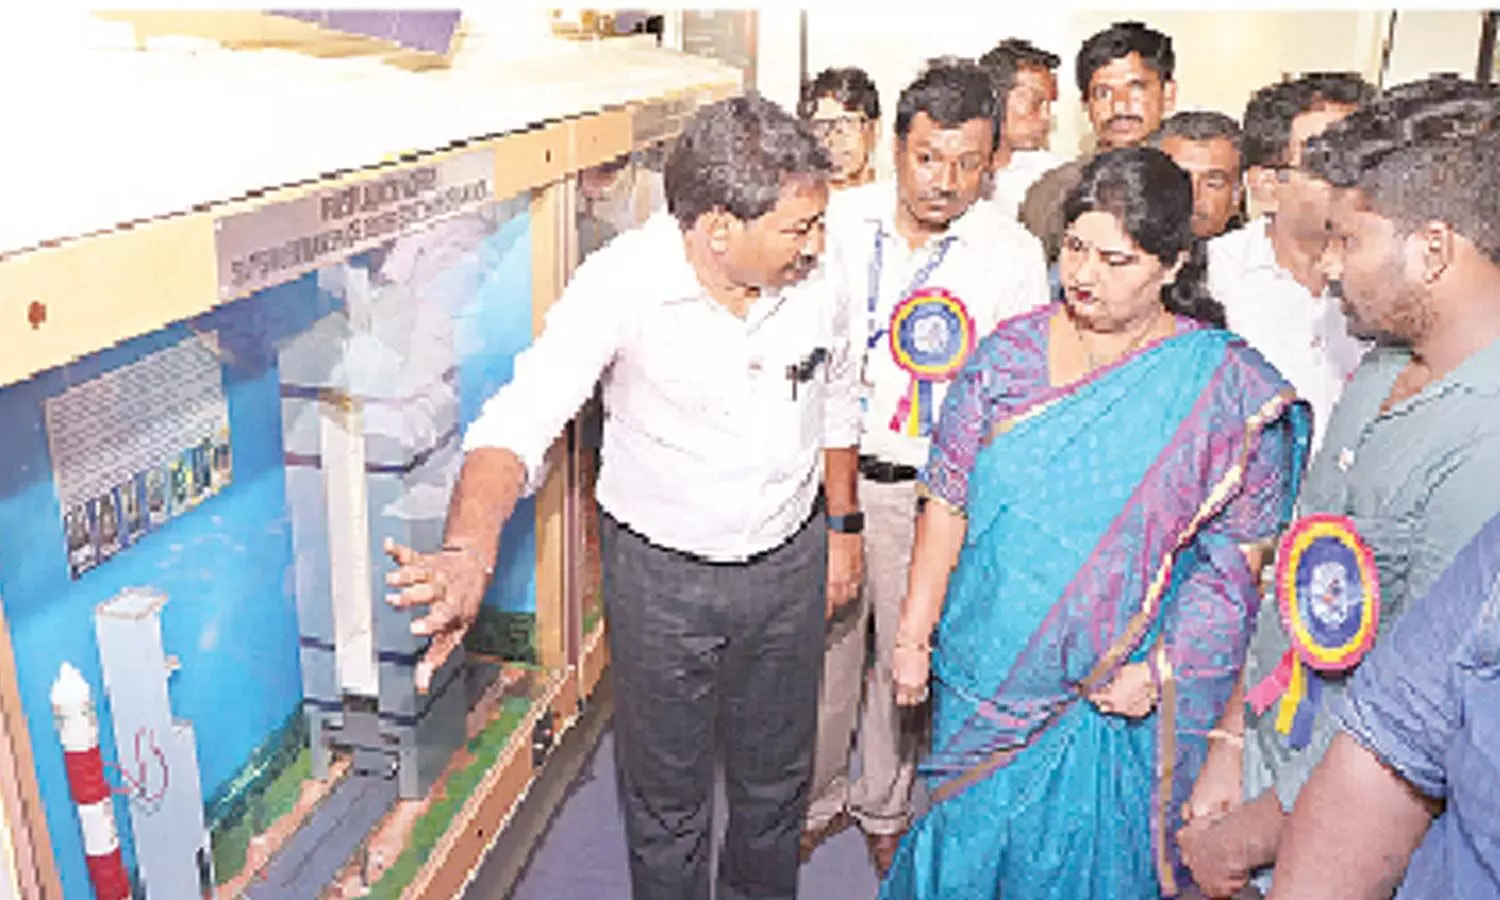 TTD JEO Sada Bhargavi visiting the SHAR space exhibition at SGS Highs school in Tirupati on Saturday.